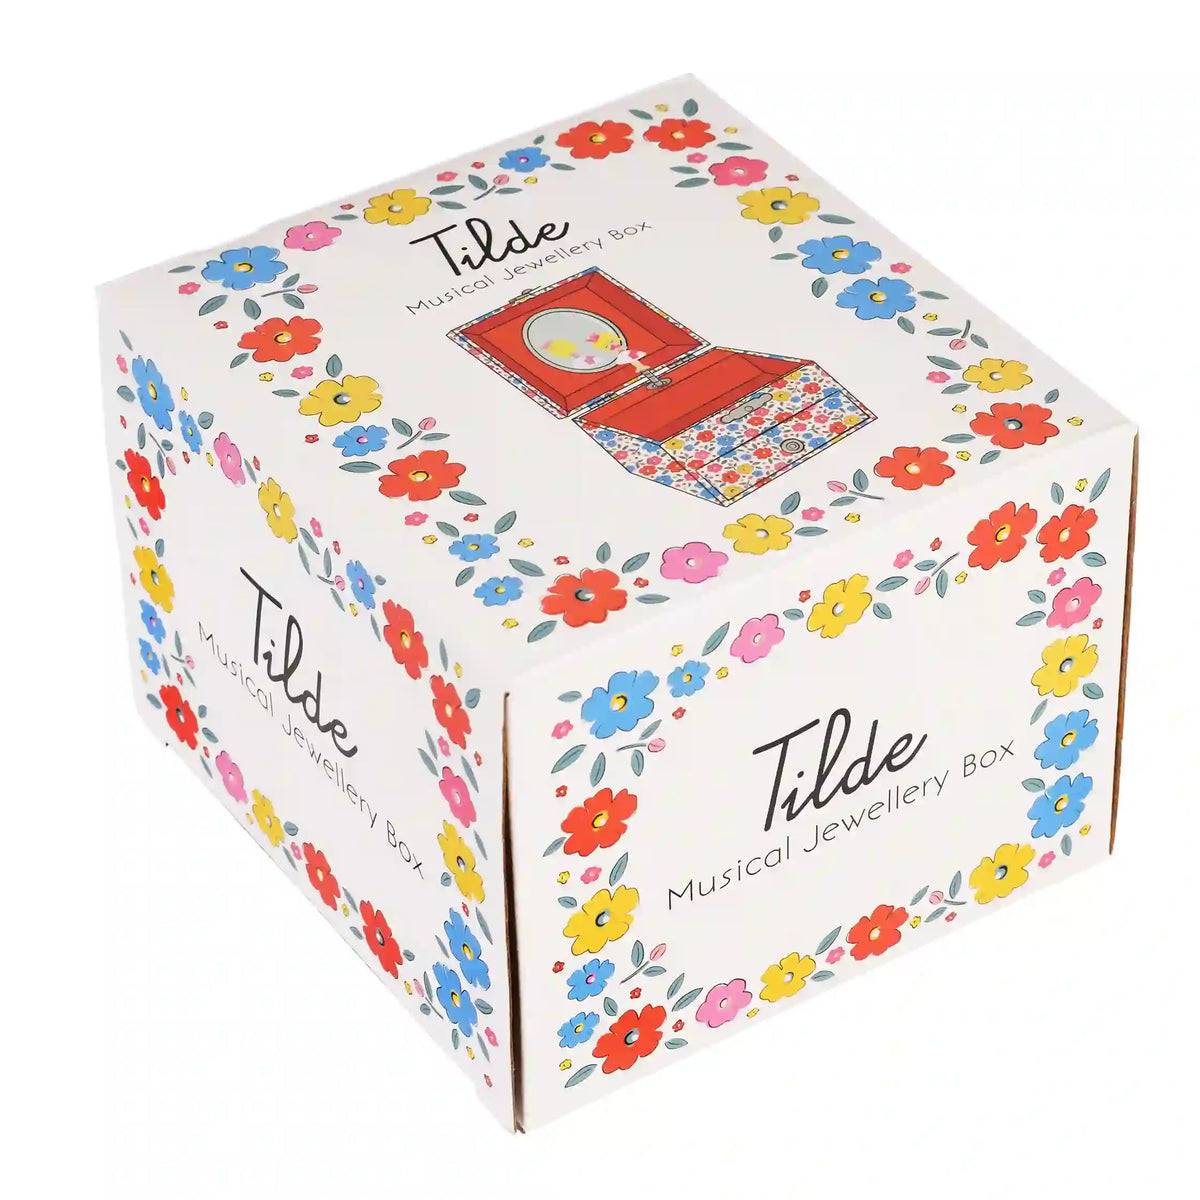 Tilde - Musical jewellery box